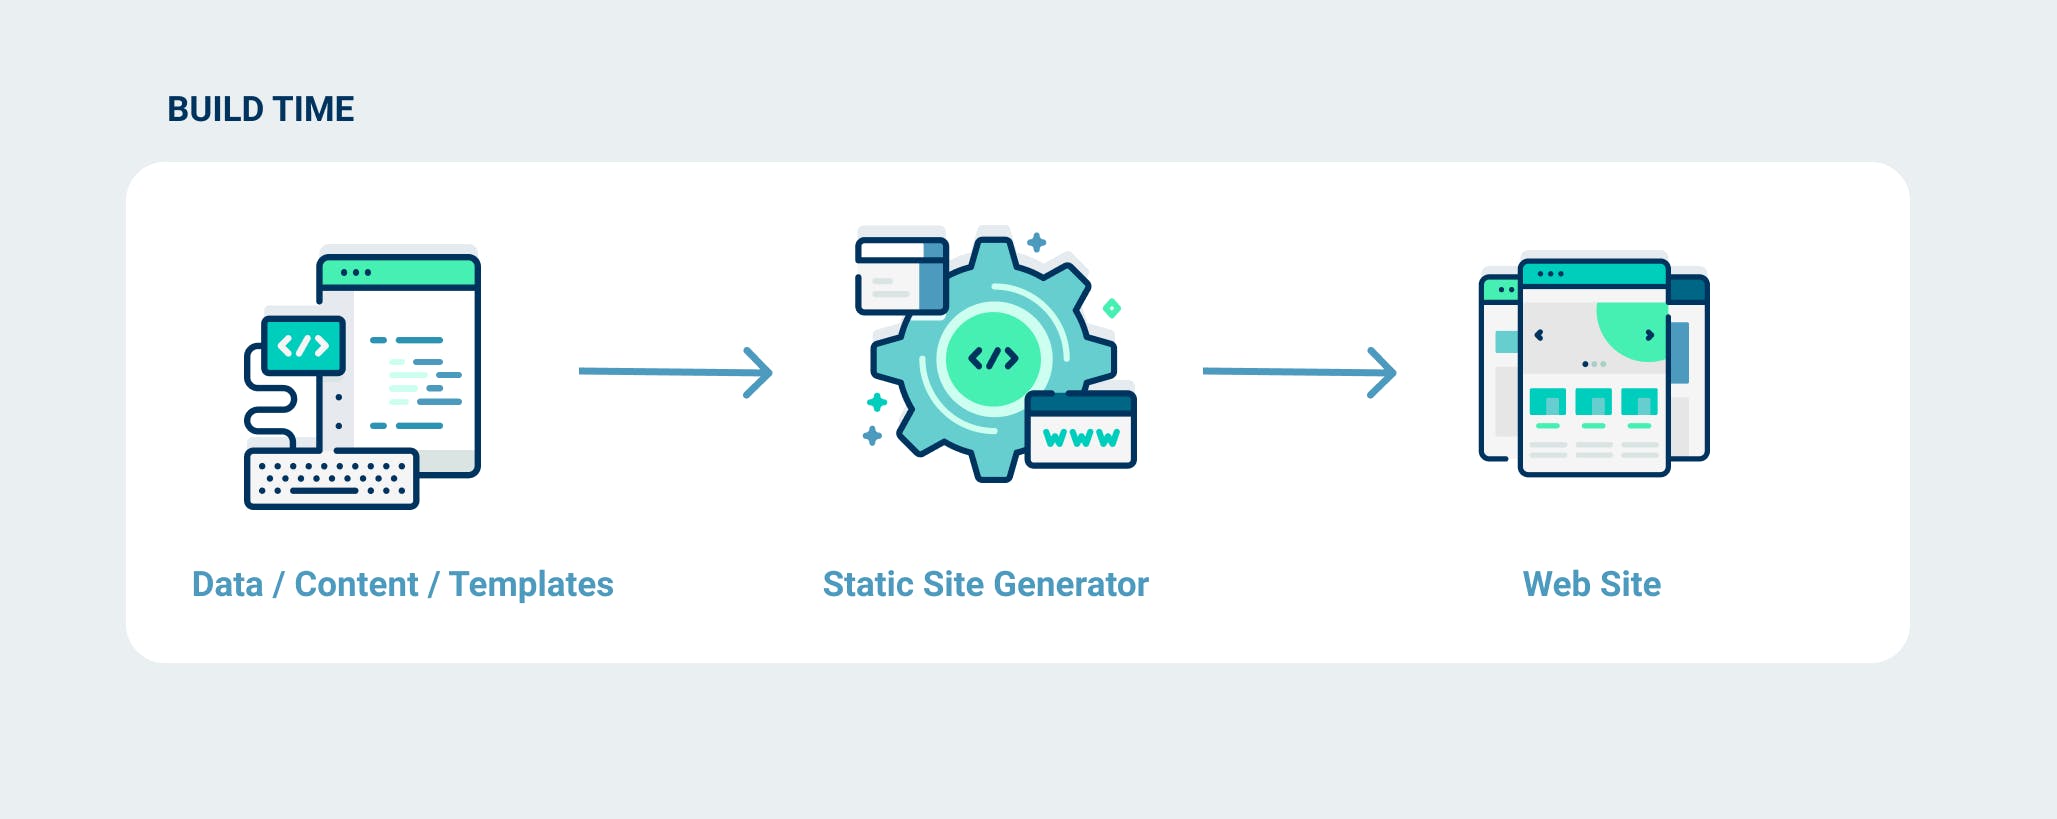 Static Site Generator